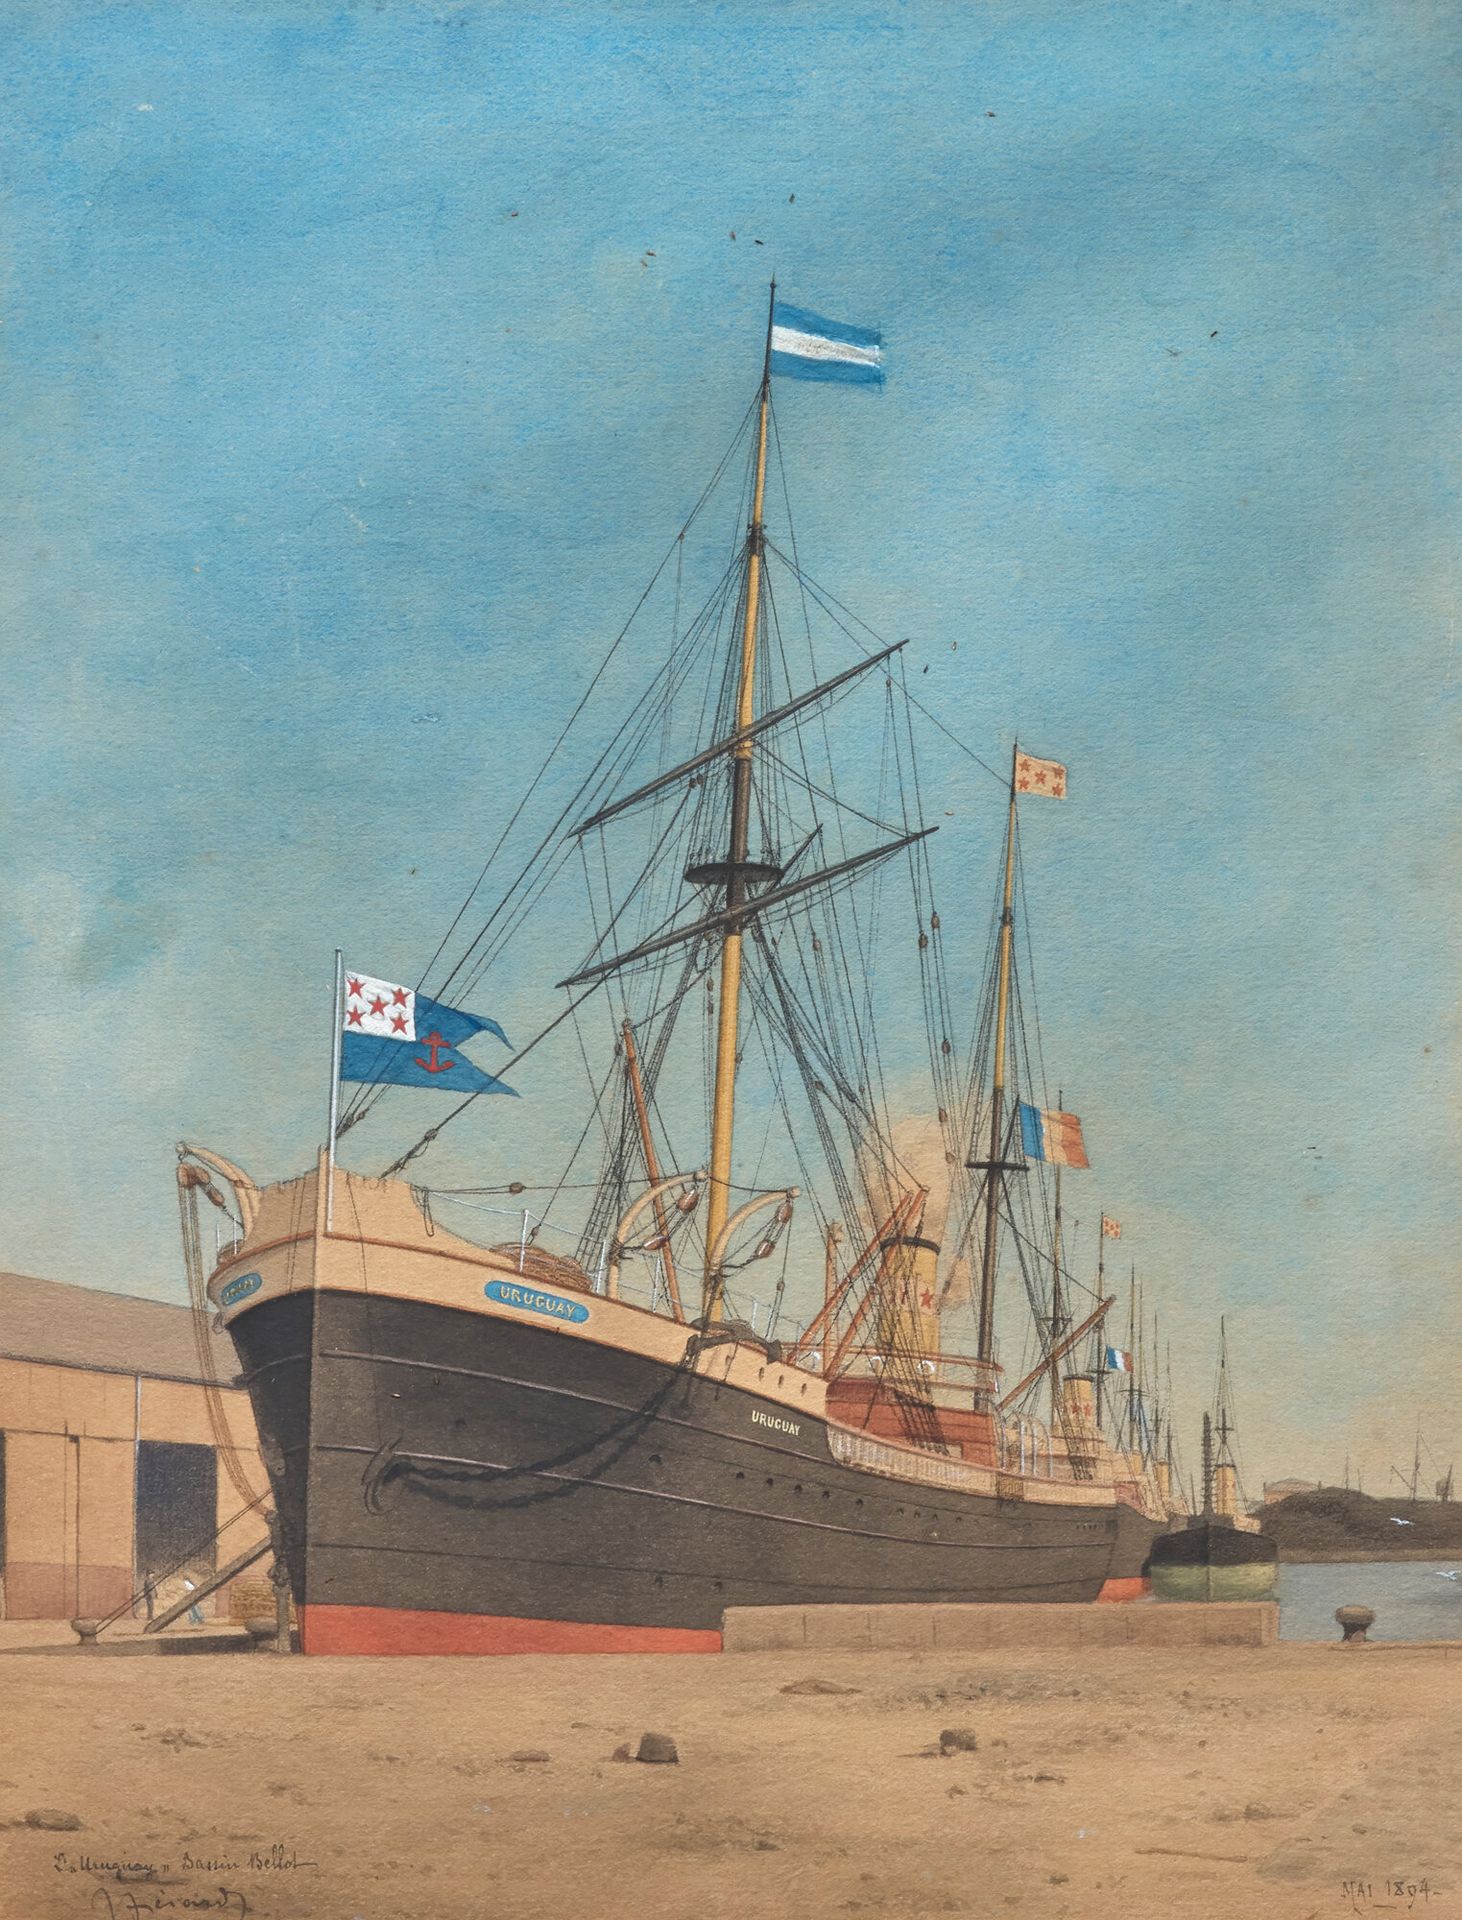 ÉCOLE FRANÇAISE, fin XIXème siècle 
码头上的乌拉圭混血船
纸上水彩画，有签名（未破译），日期为1894年5月，名称和位置为贝&hellip;